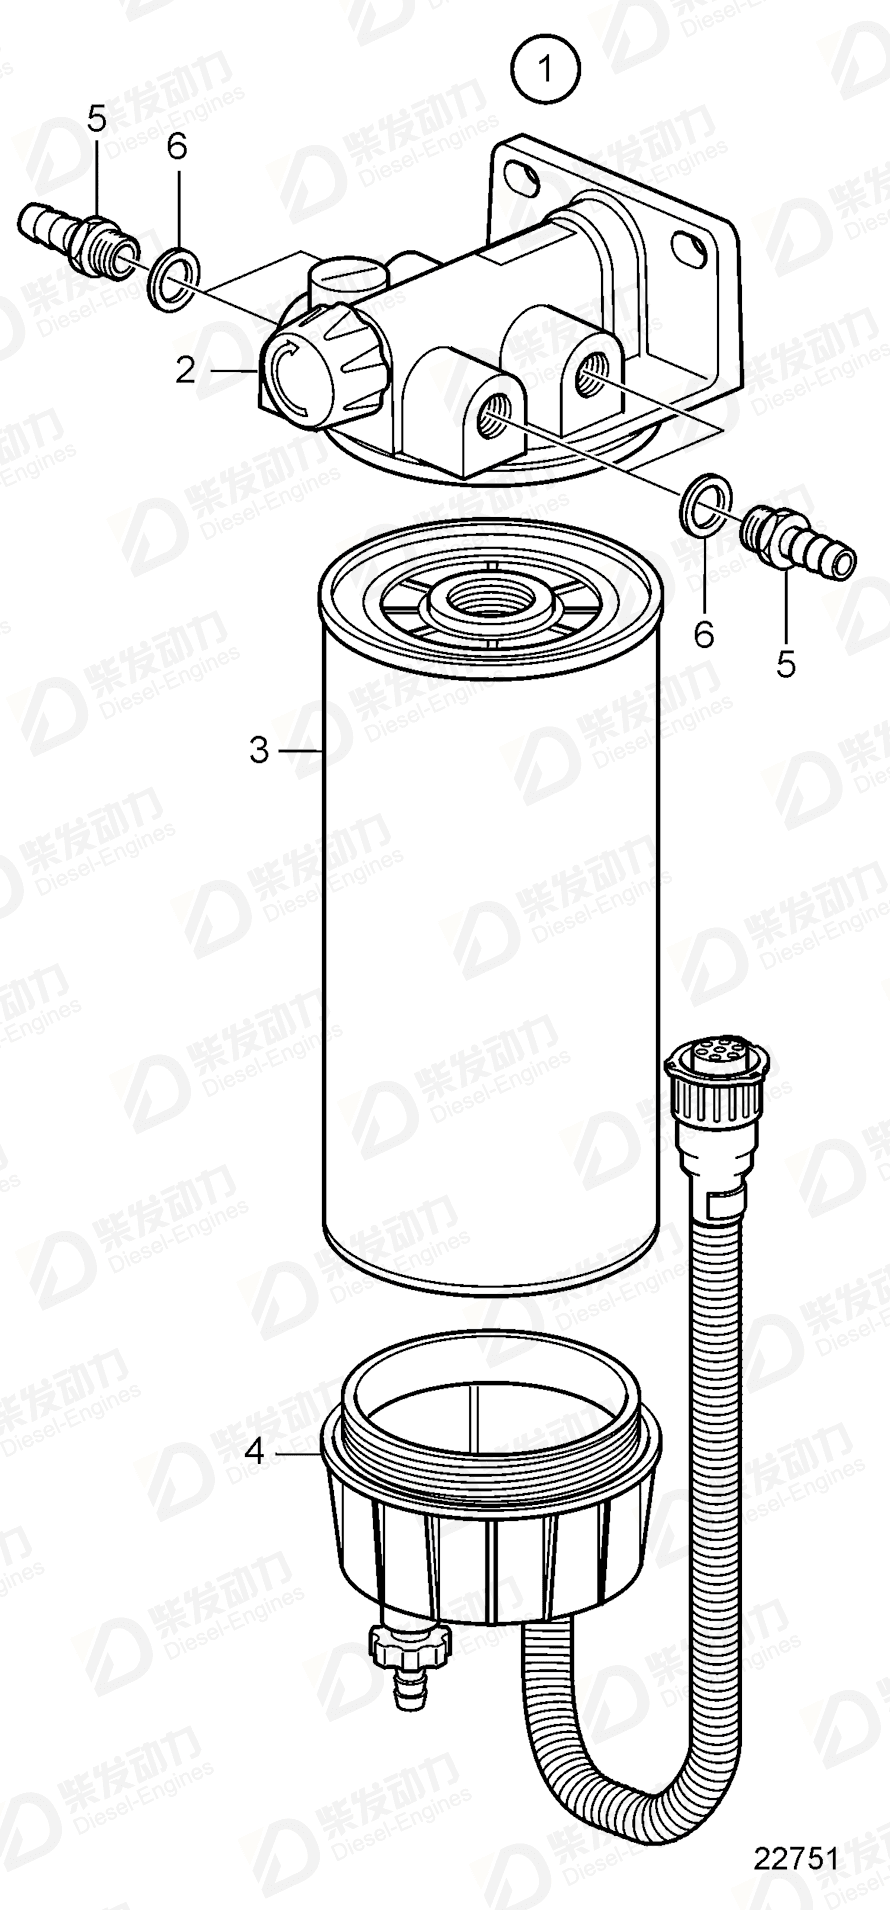 VOLVO Fuel filter kit 11110703 Drawing